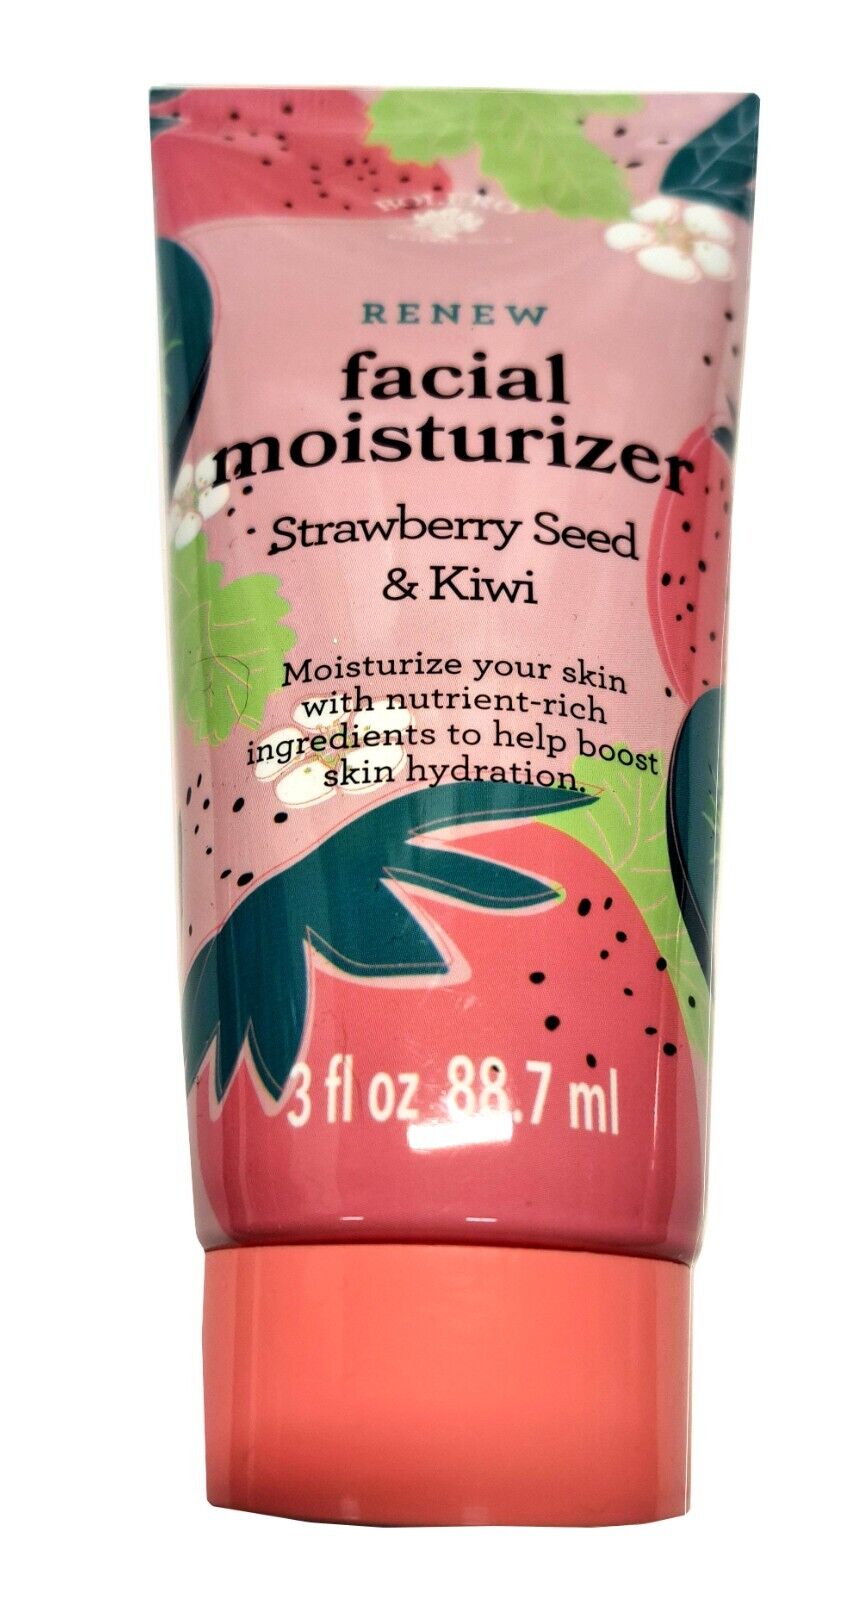 Bolero Facial Moisturizer Strawberry Seed & Kiwi 3fl oz, 88.7ml